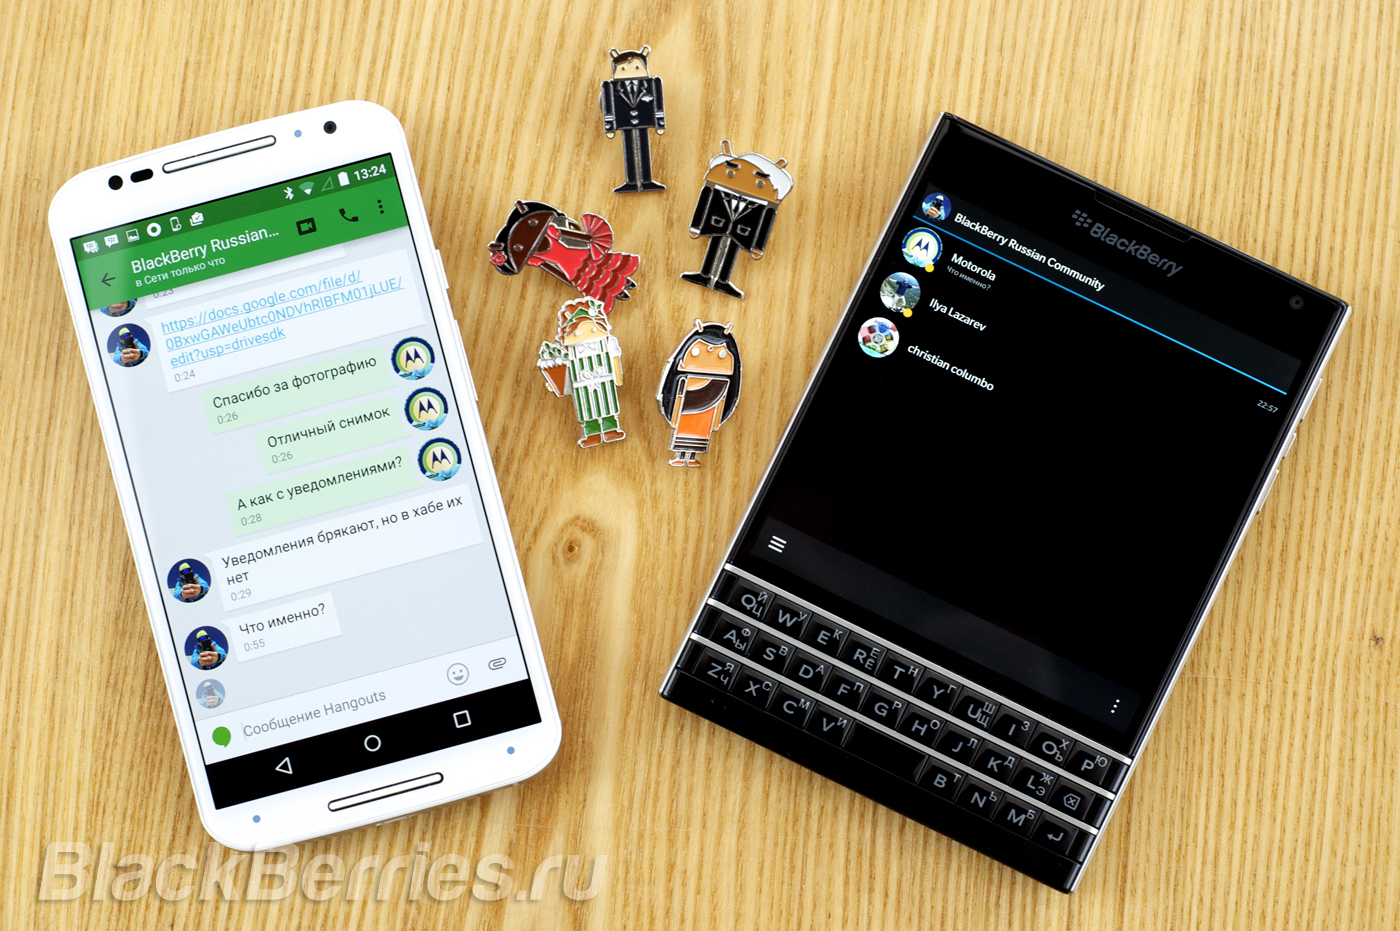 BlackBerry-Motorola-Hg10-2